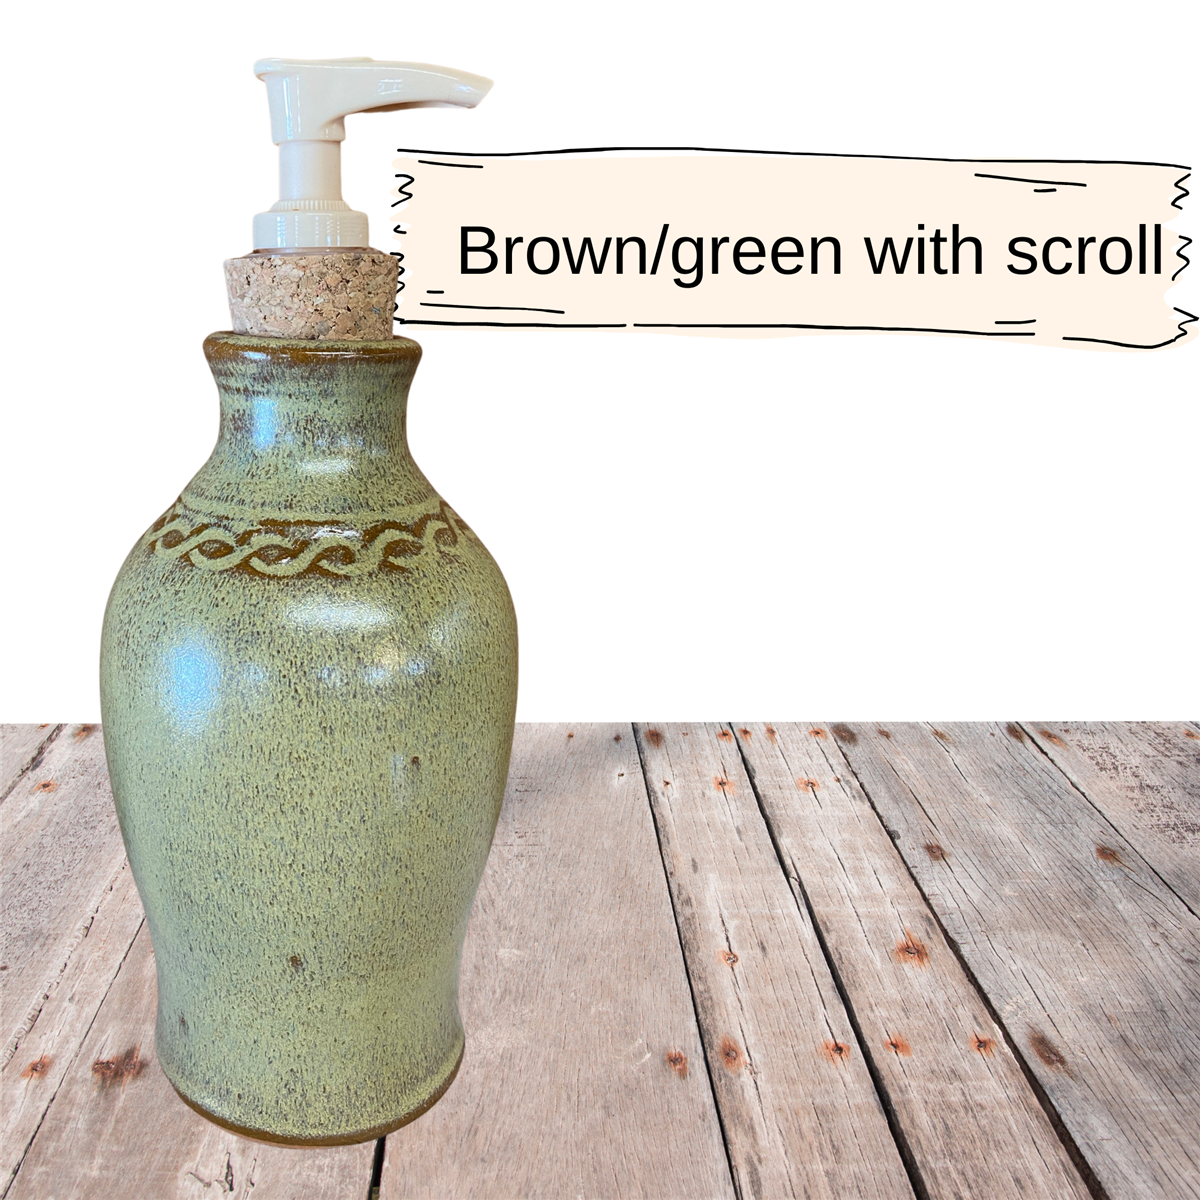 Liquid soap or hand sanitizer dispenser, handmade pottery lotion bottle. Ceramic with plastic pump cork stopper